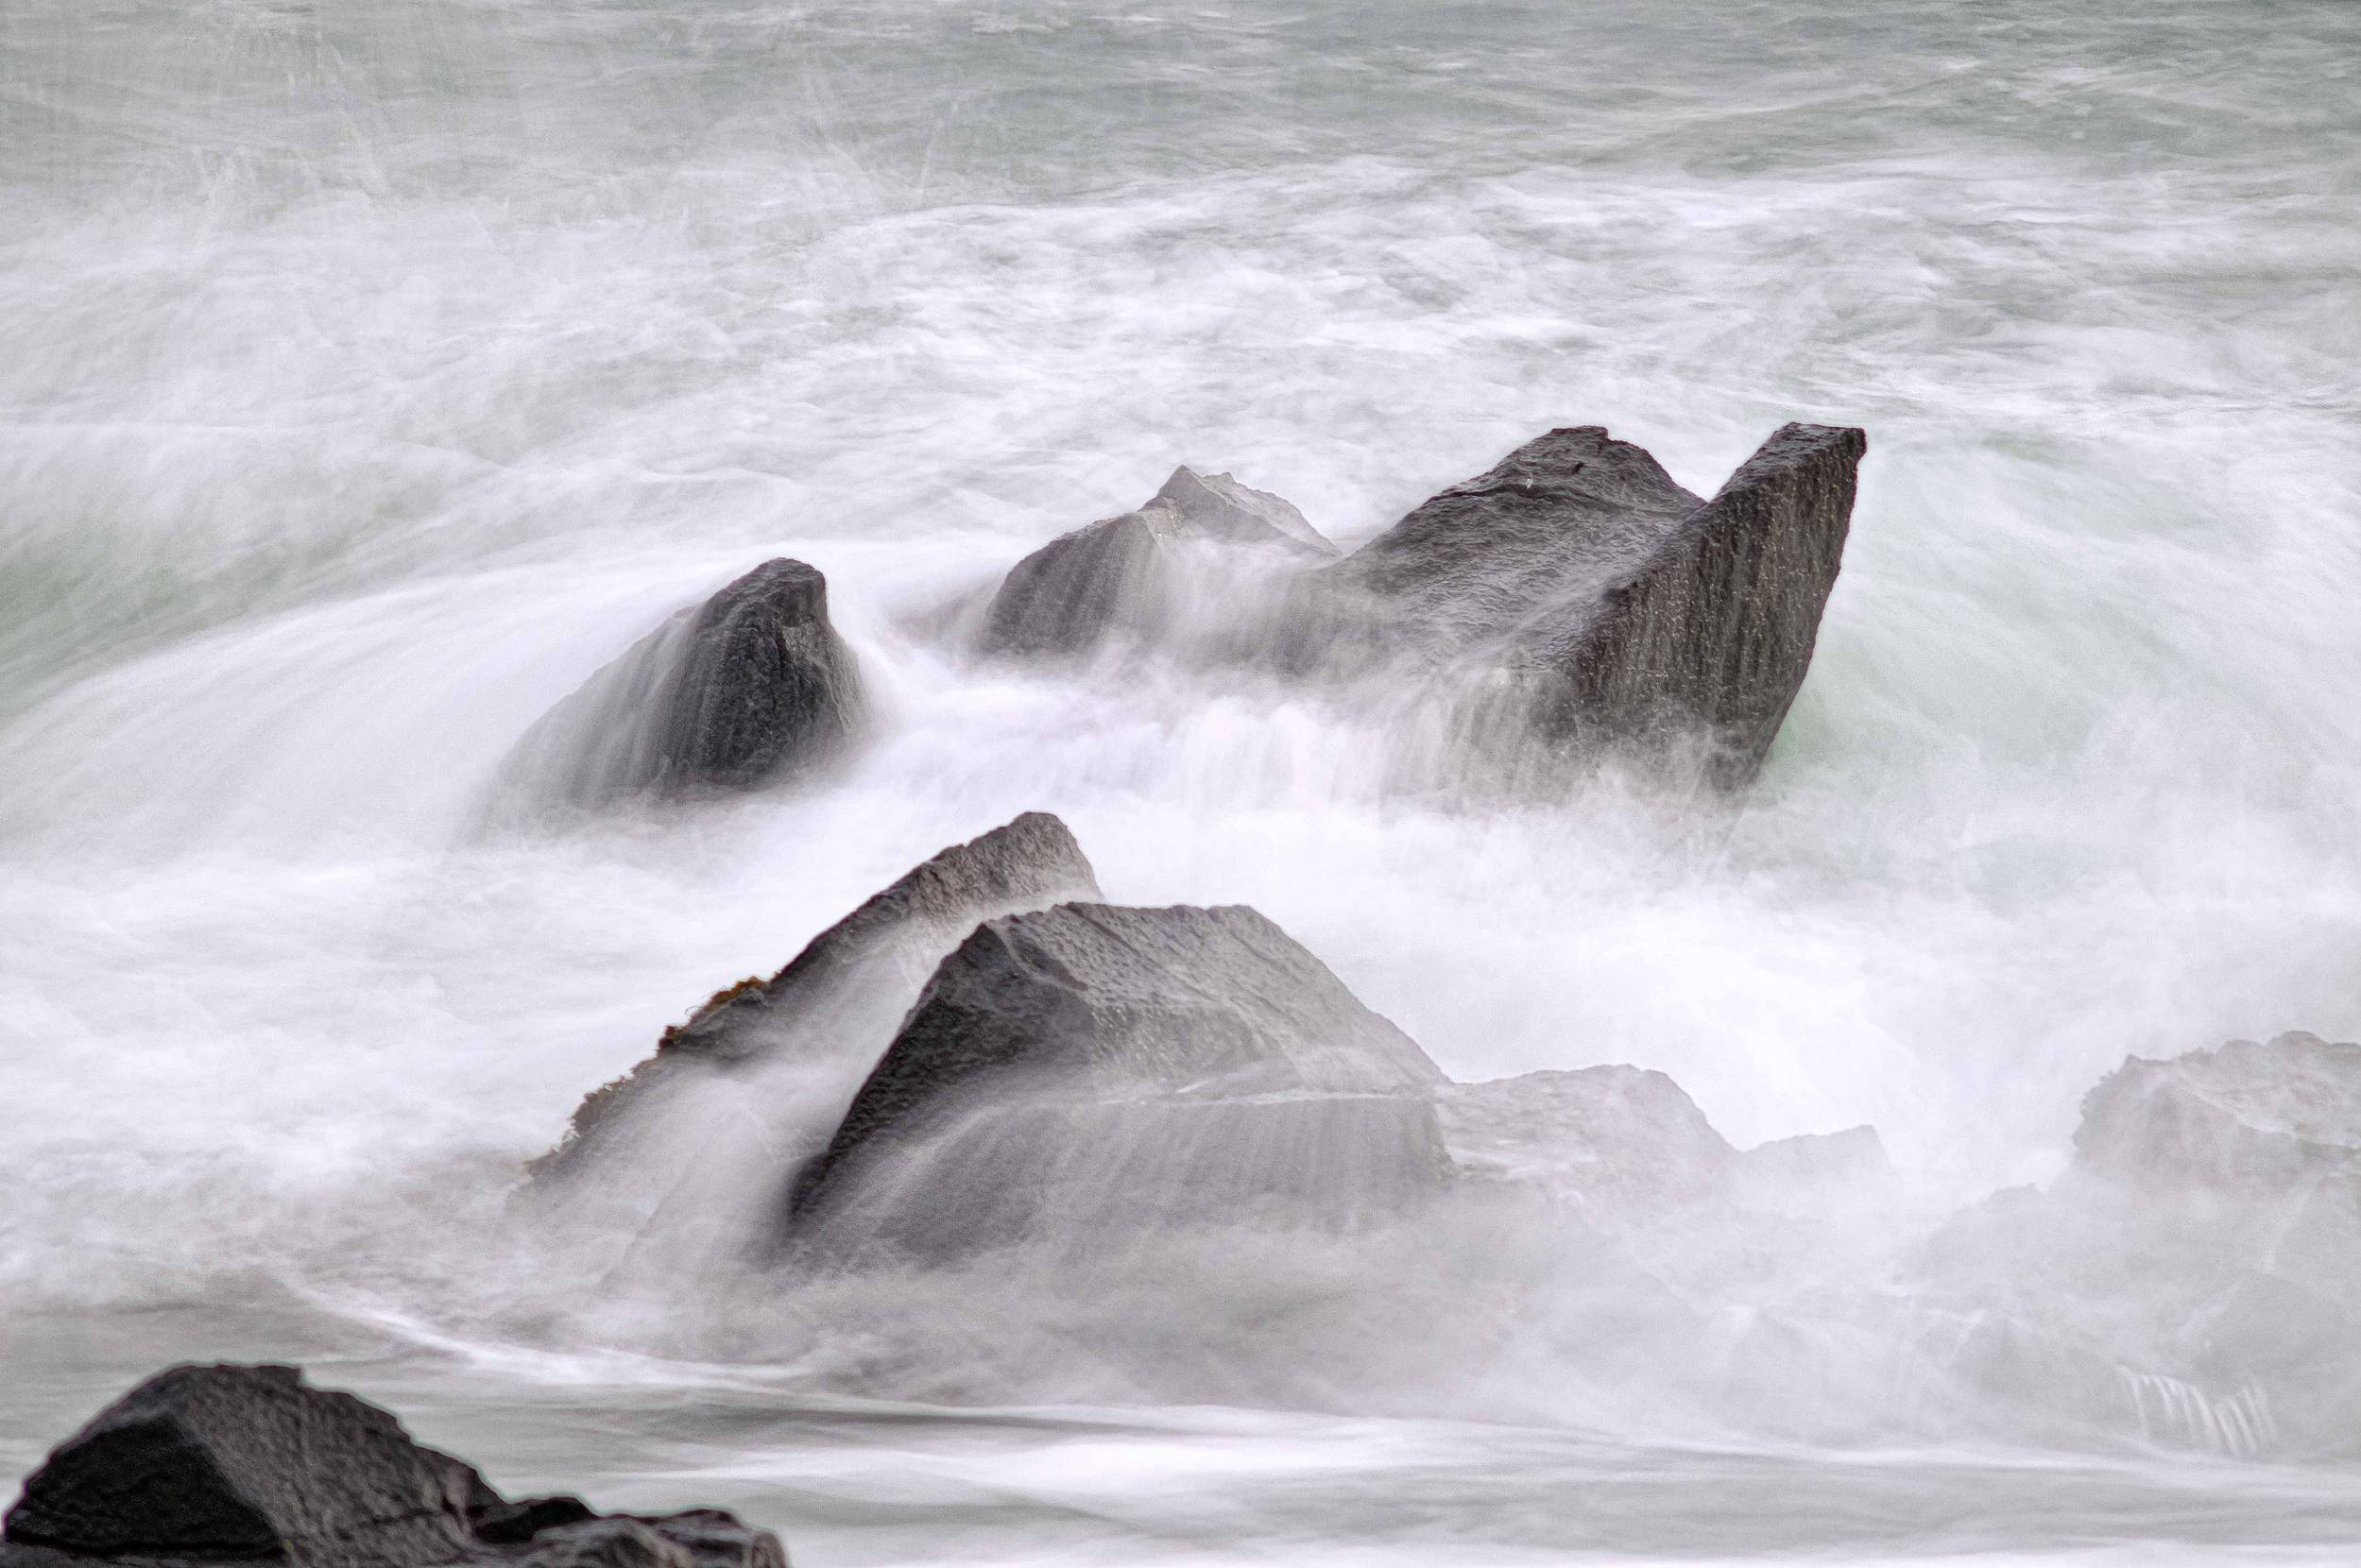 Waves washing over rocks